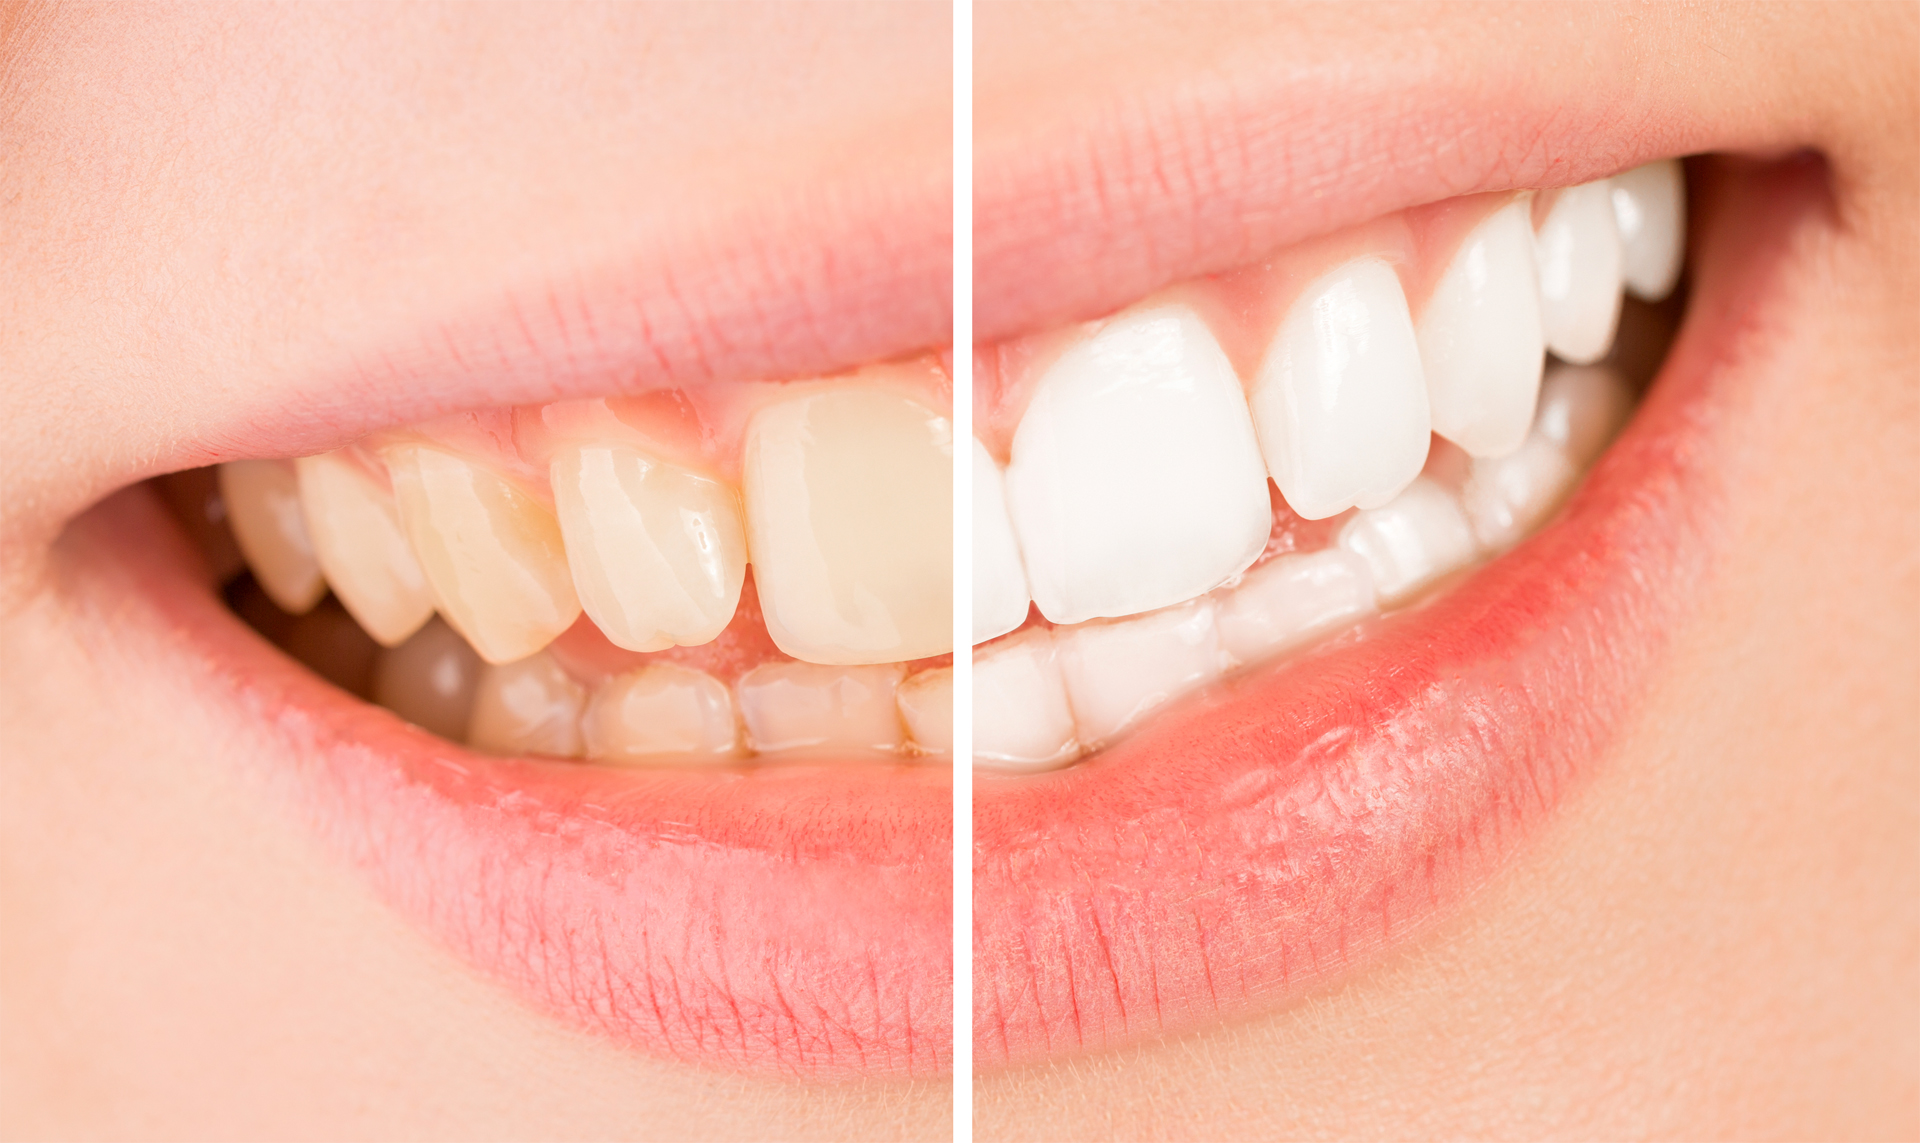 teeth bleaching / whitening